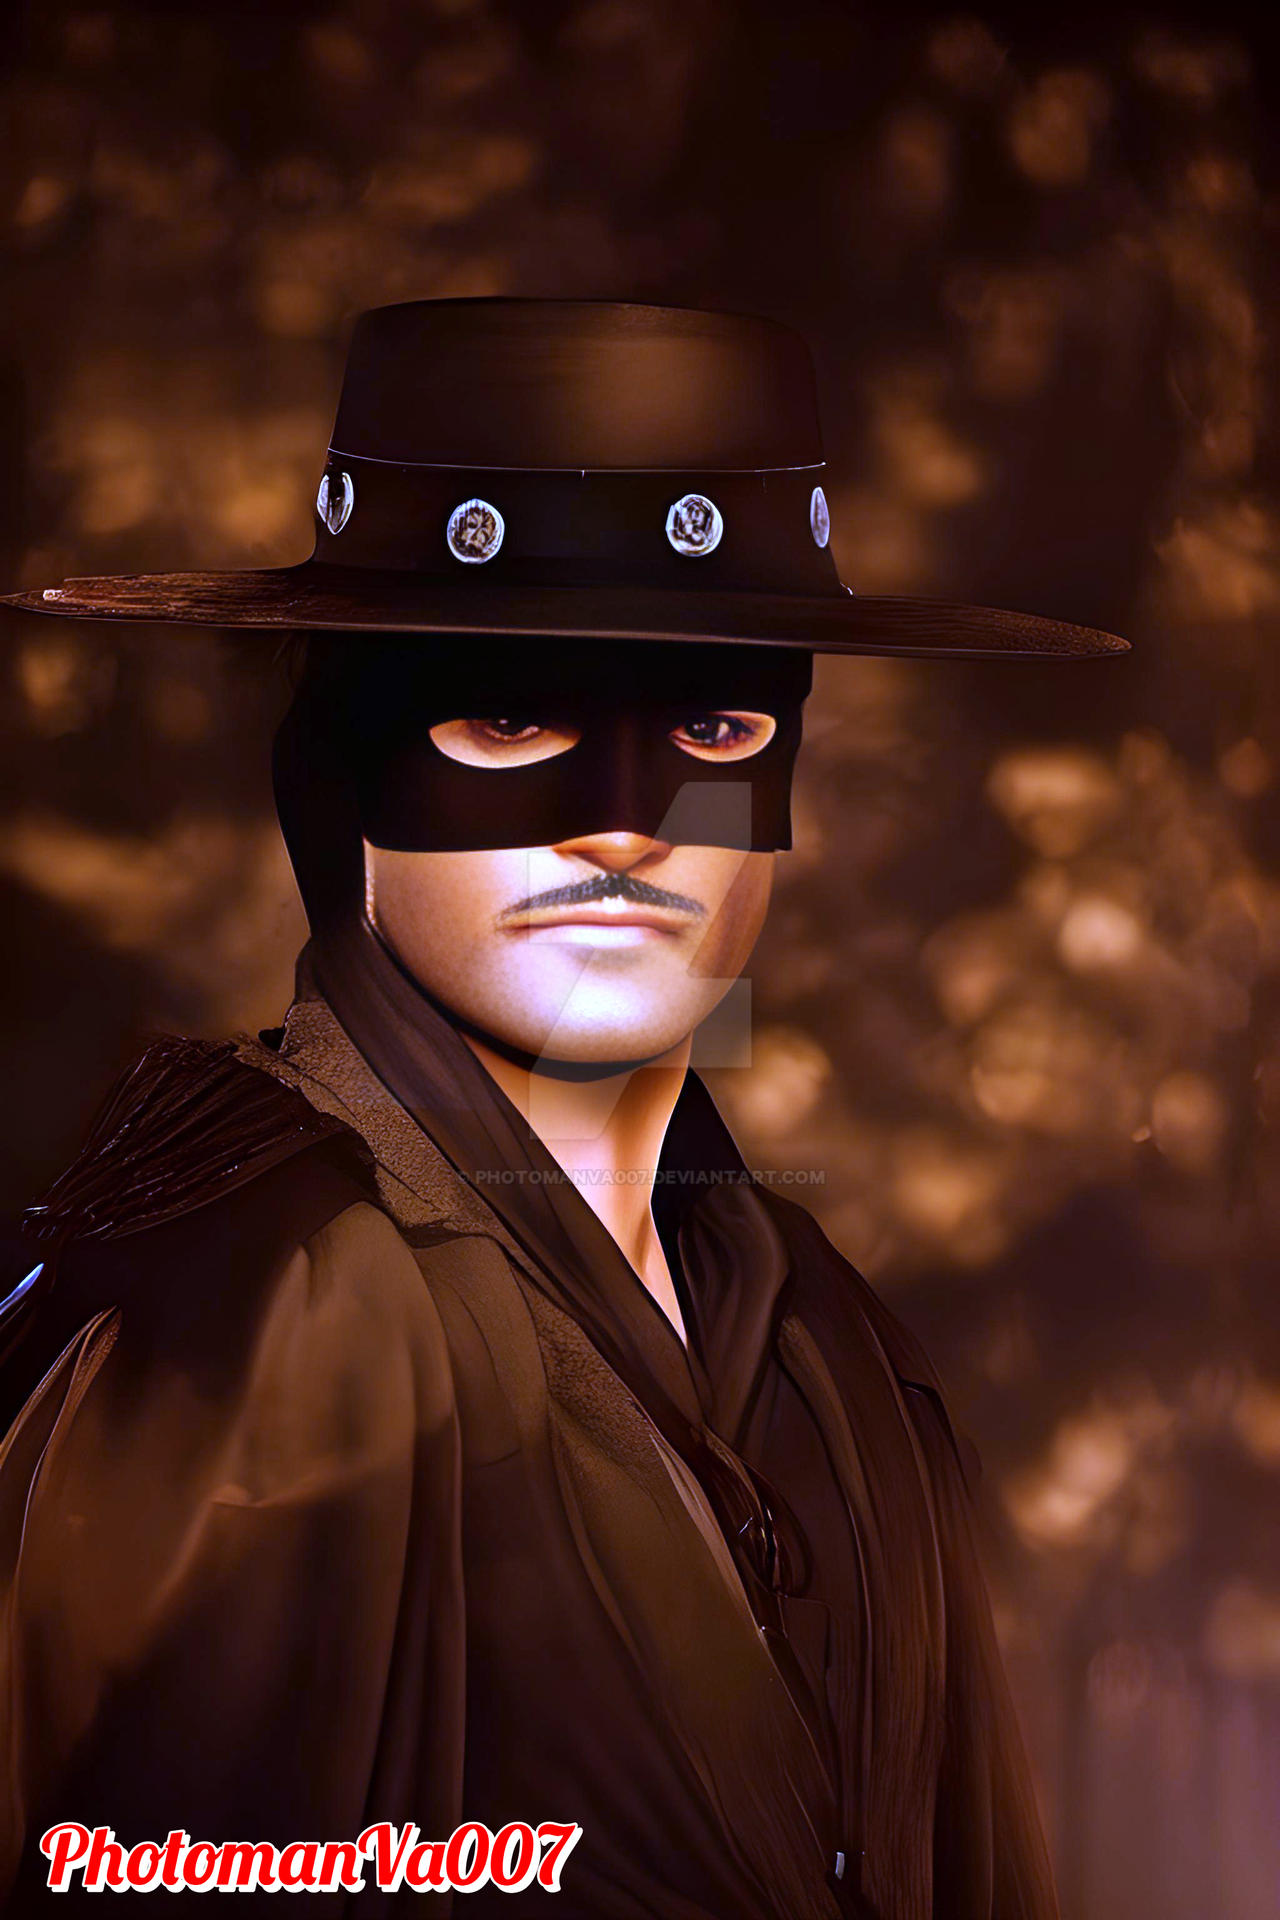 Zorro by PhotomanVa007 on DeviantArt